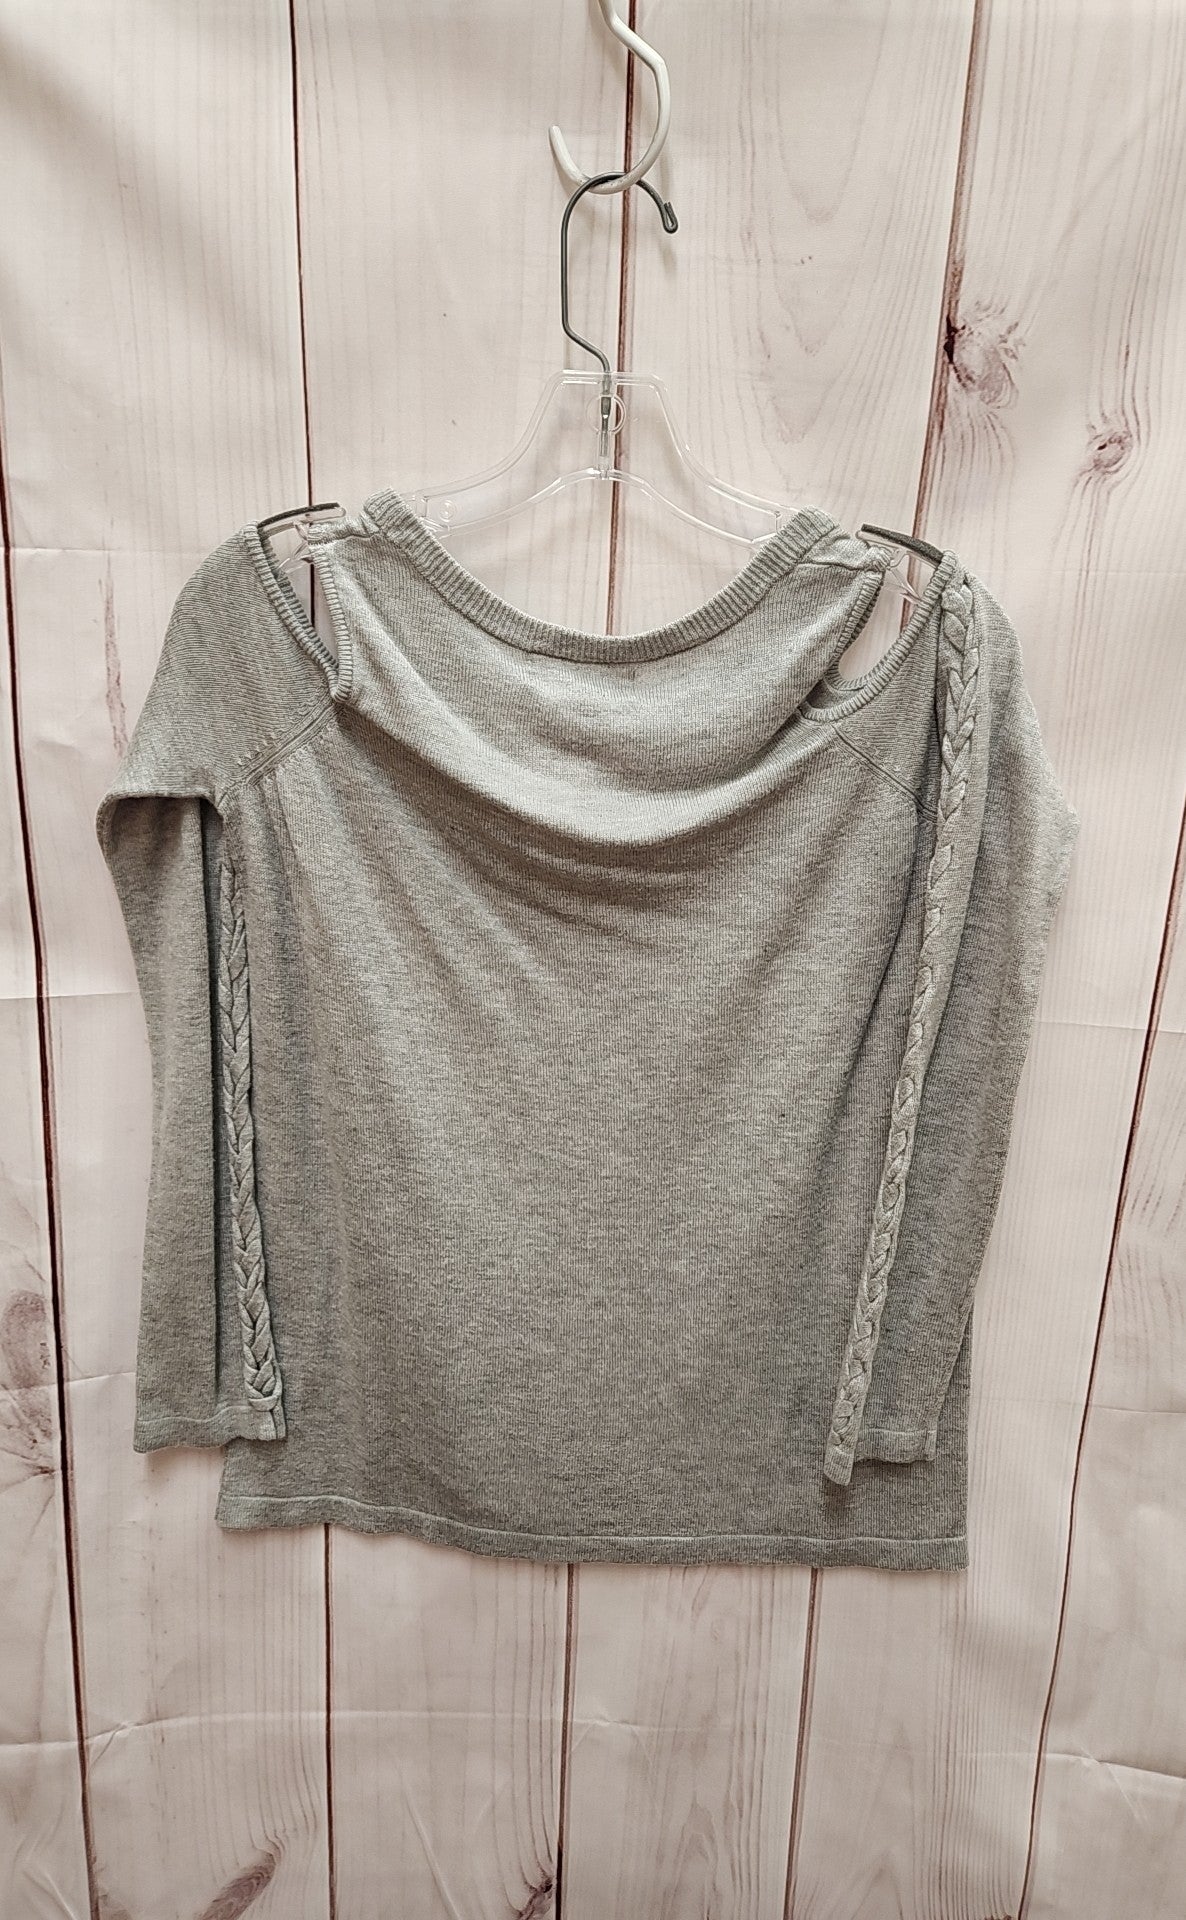 Pink Republic Women's Size M Gray Sweater